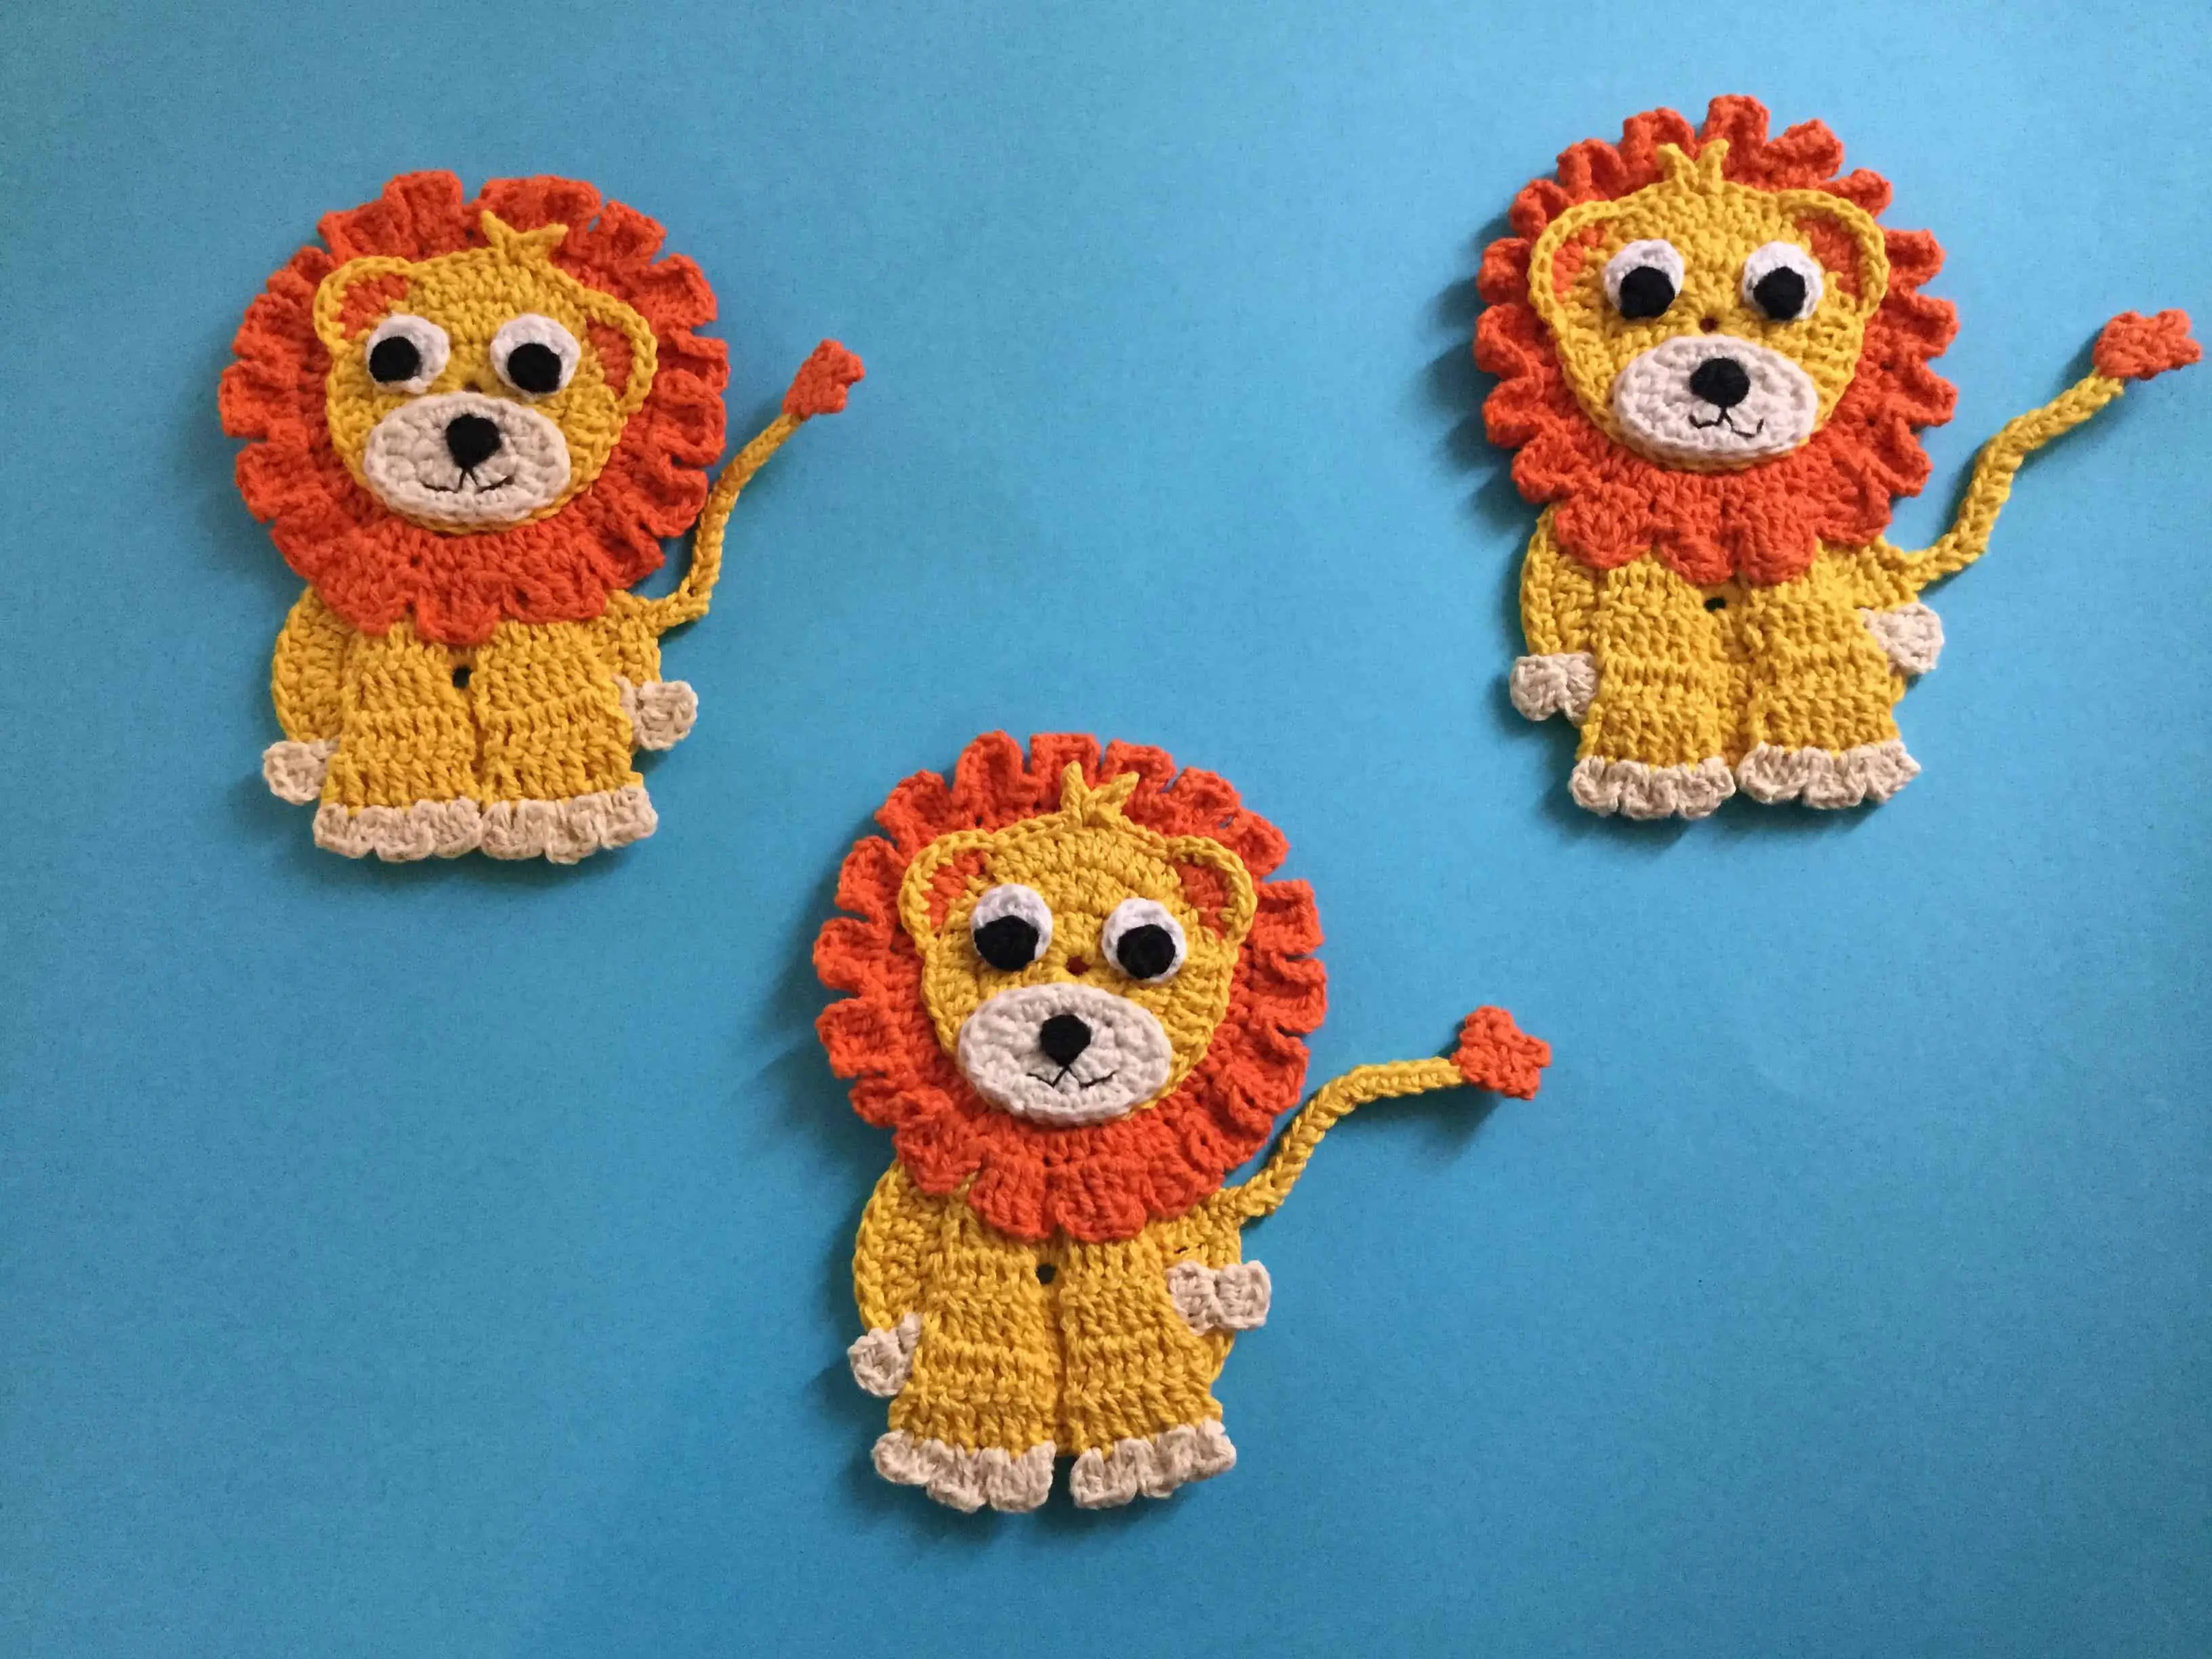 Finished crochet sitting lion group landscape